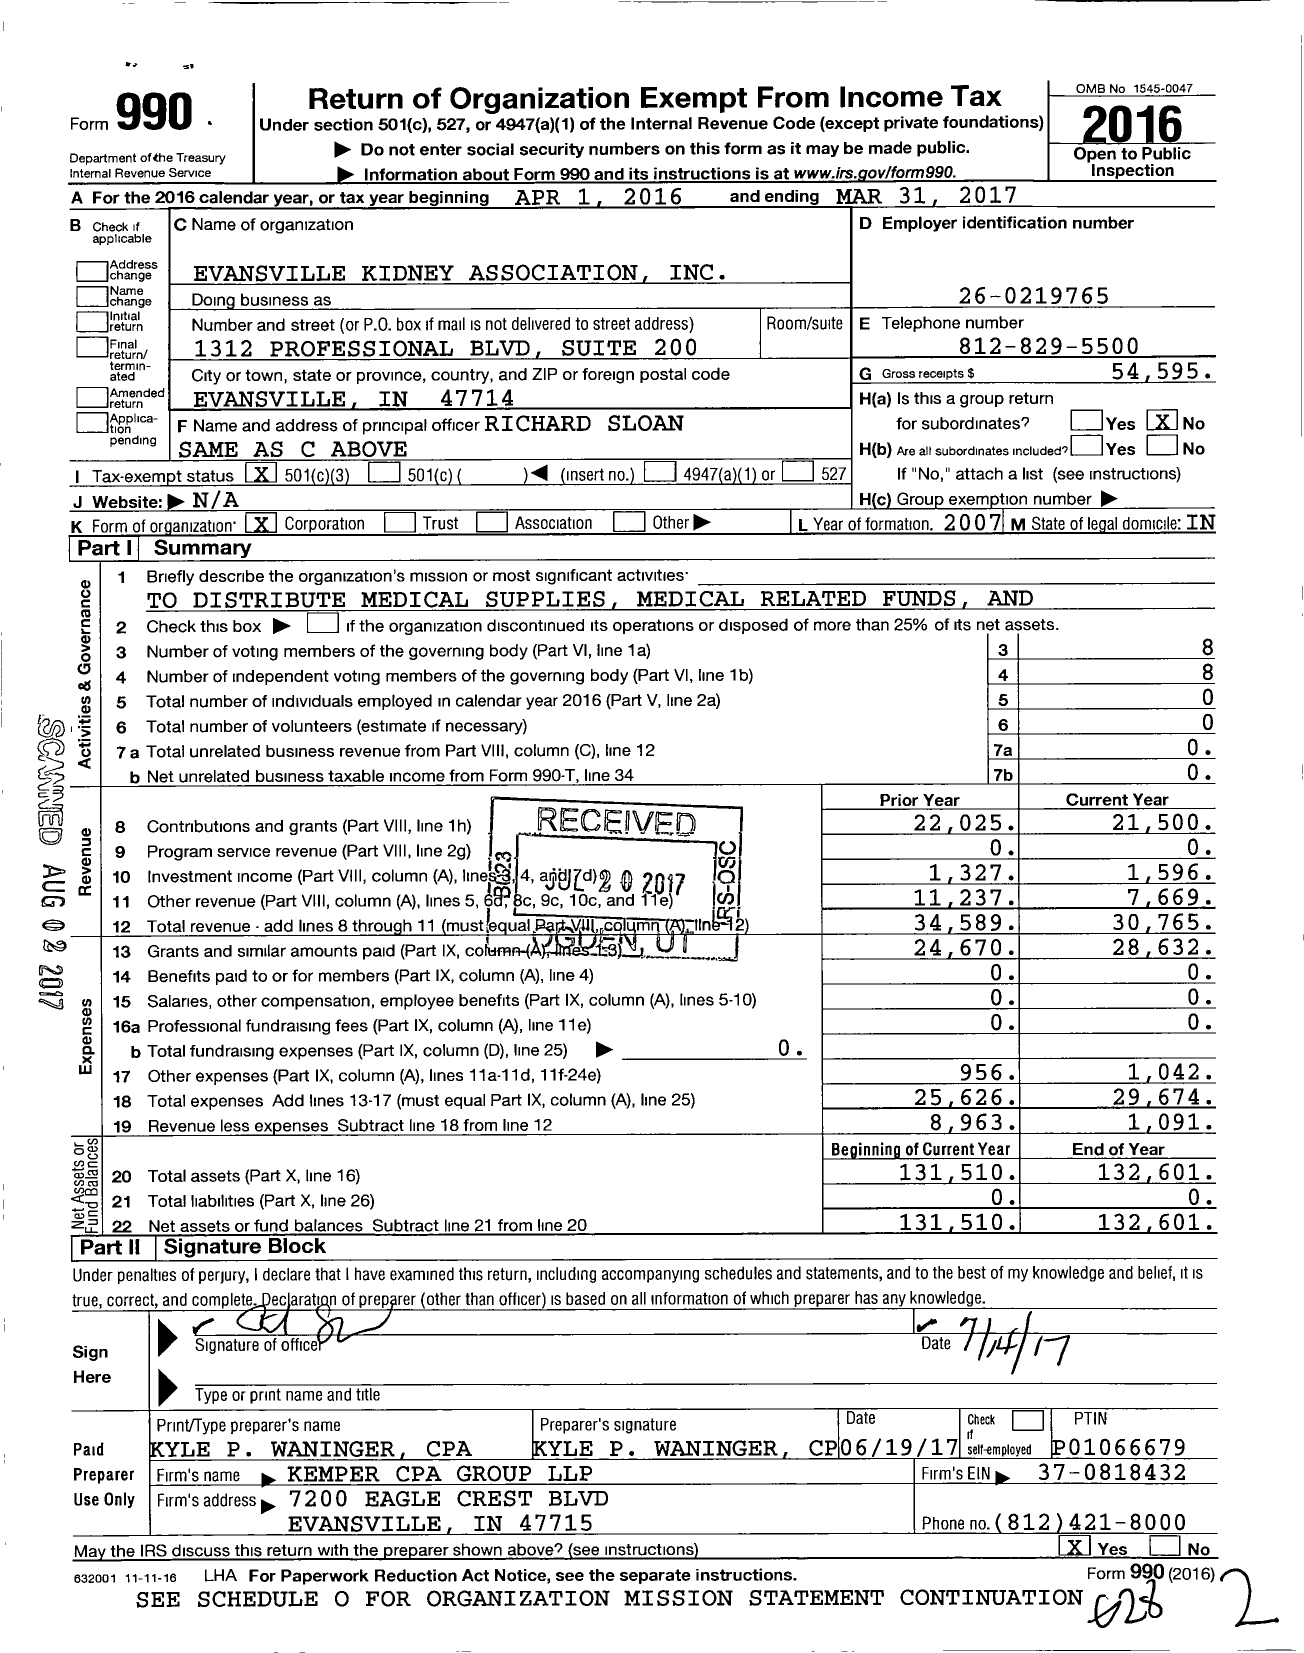 Image of first page of 2016 Form 990 for Evansville Kidney Association